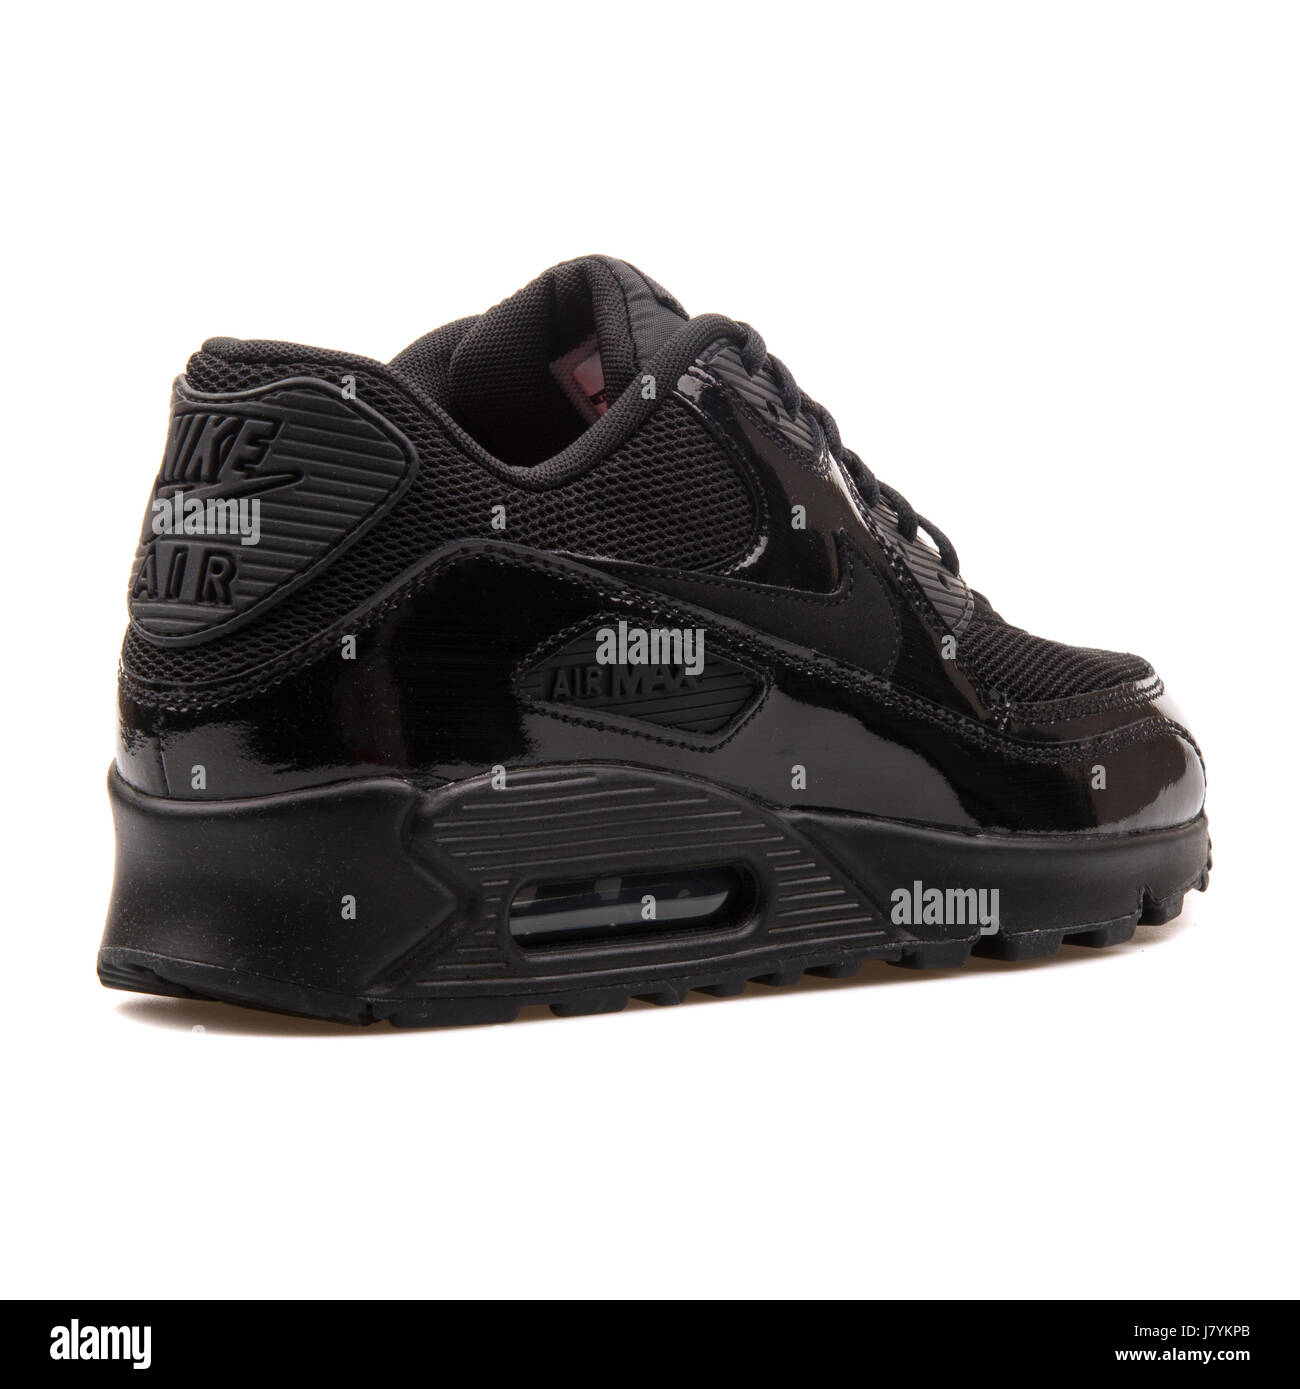 WMNS Nike Air Max 90 Premium Donna nera lucida Sneakers - 443817-002 Foto  stock - Alamy